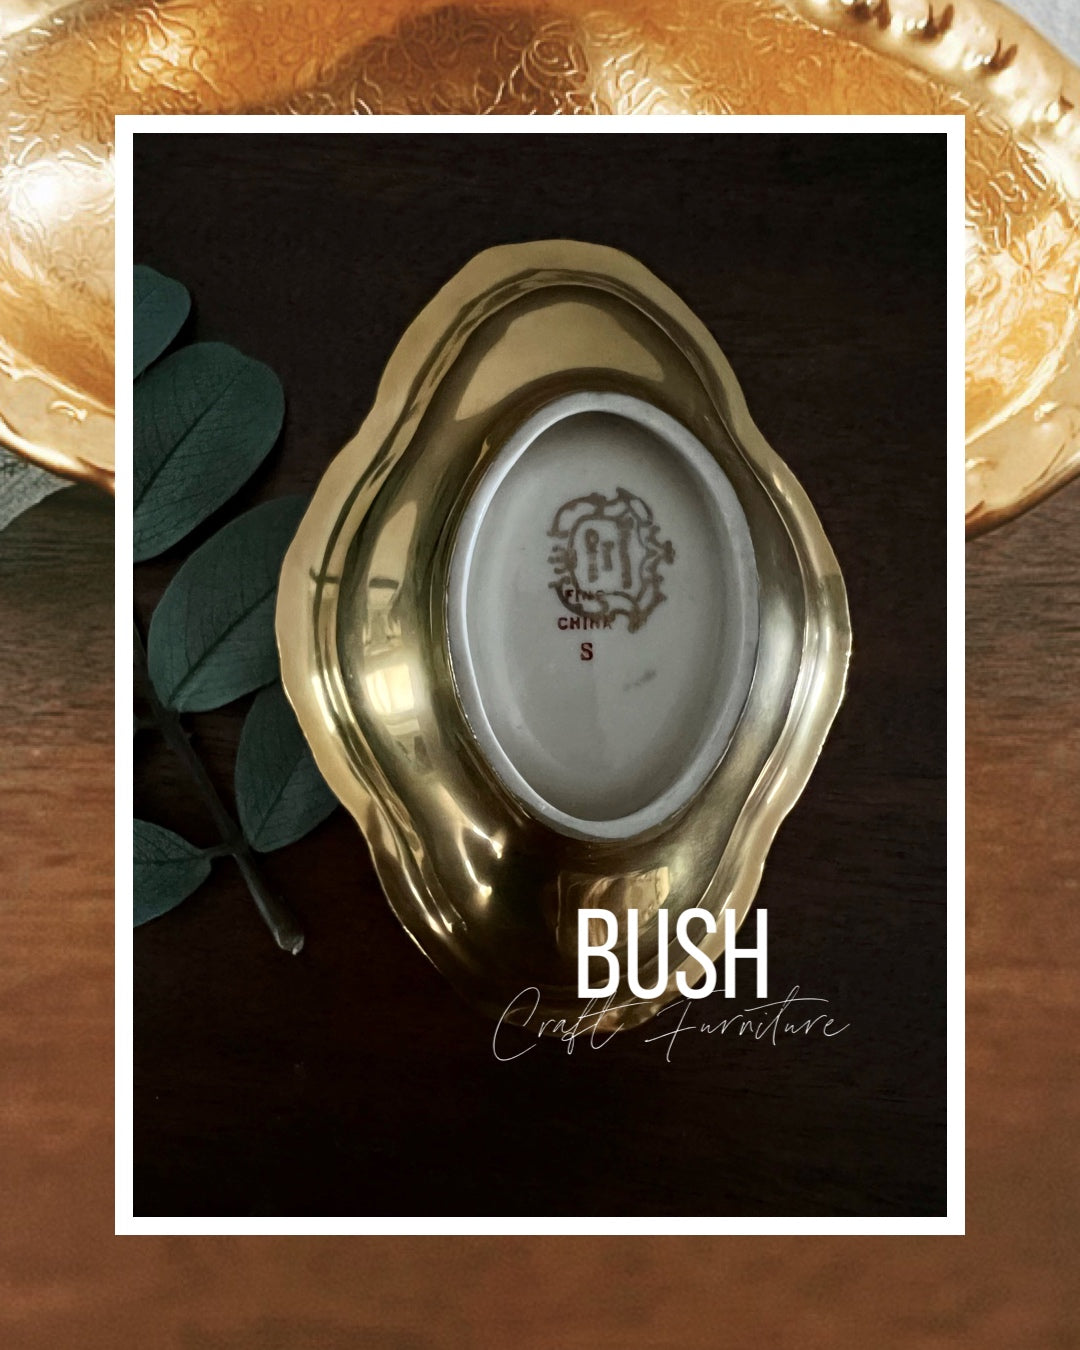 Stouffer Fine China Gold Encrusted Vintage Sugar Bowl - Bush Craft Furniture